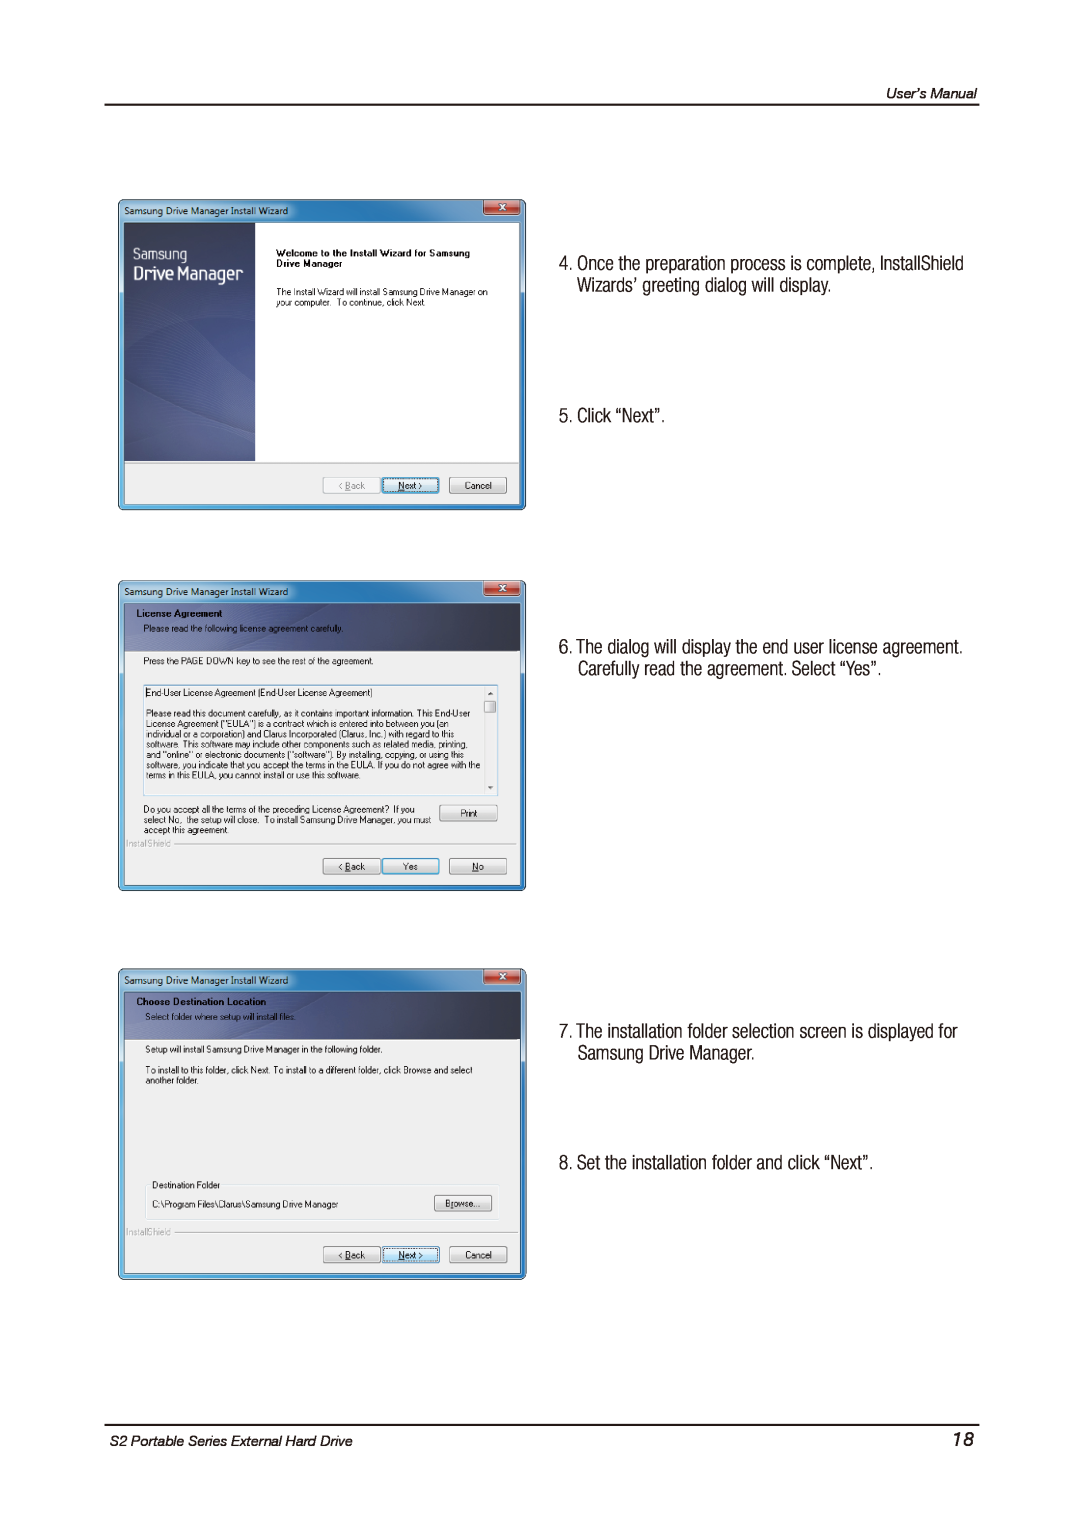 Samsung HXMU016DA, S2 PORTABLE 3.0 user manual Click “Next”, Set the installation folder and click “Next”, User’s Manual 